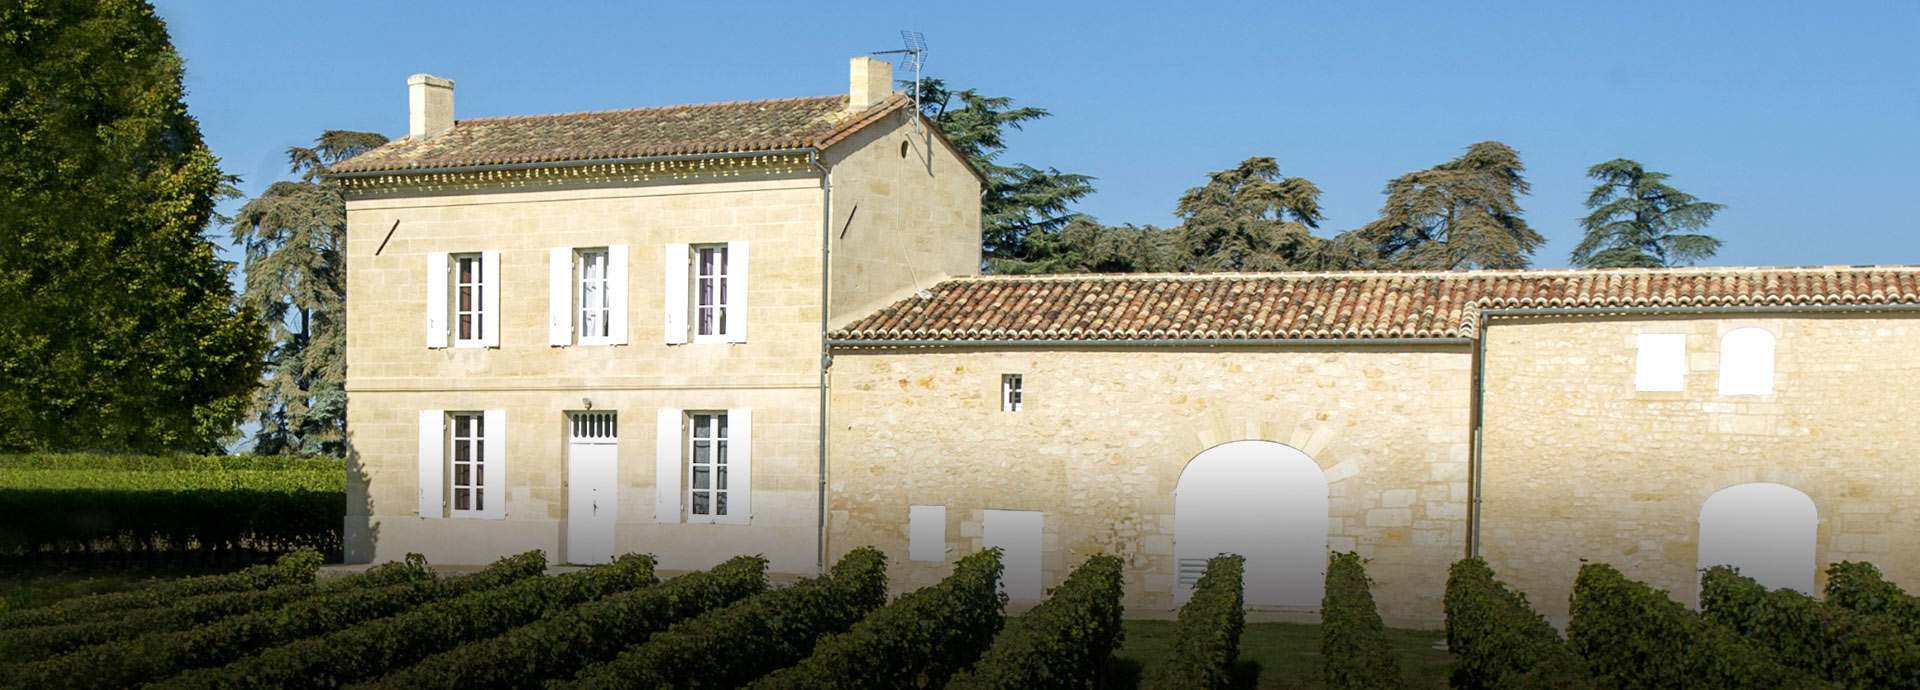 Château Rocheyron banner image